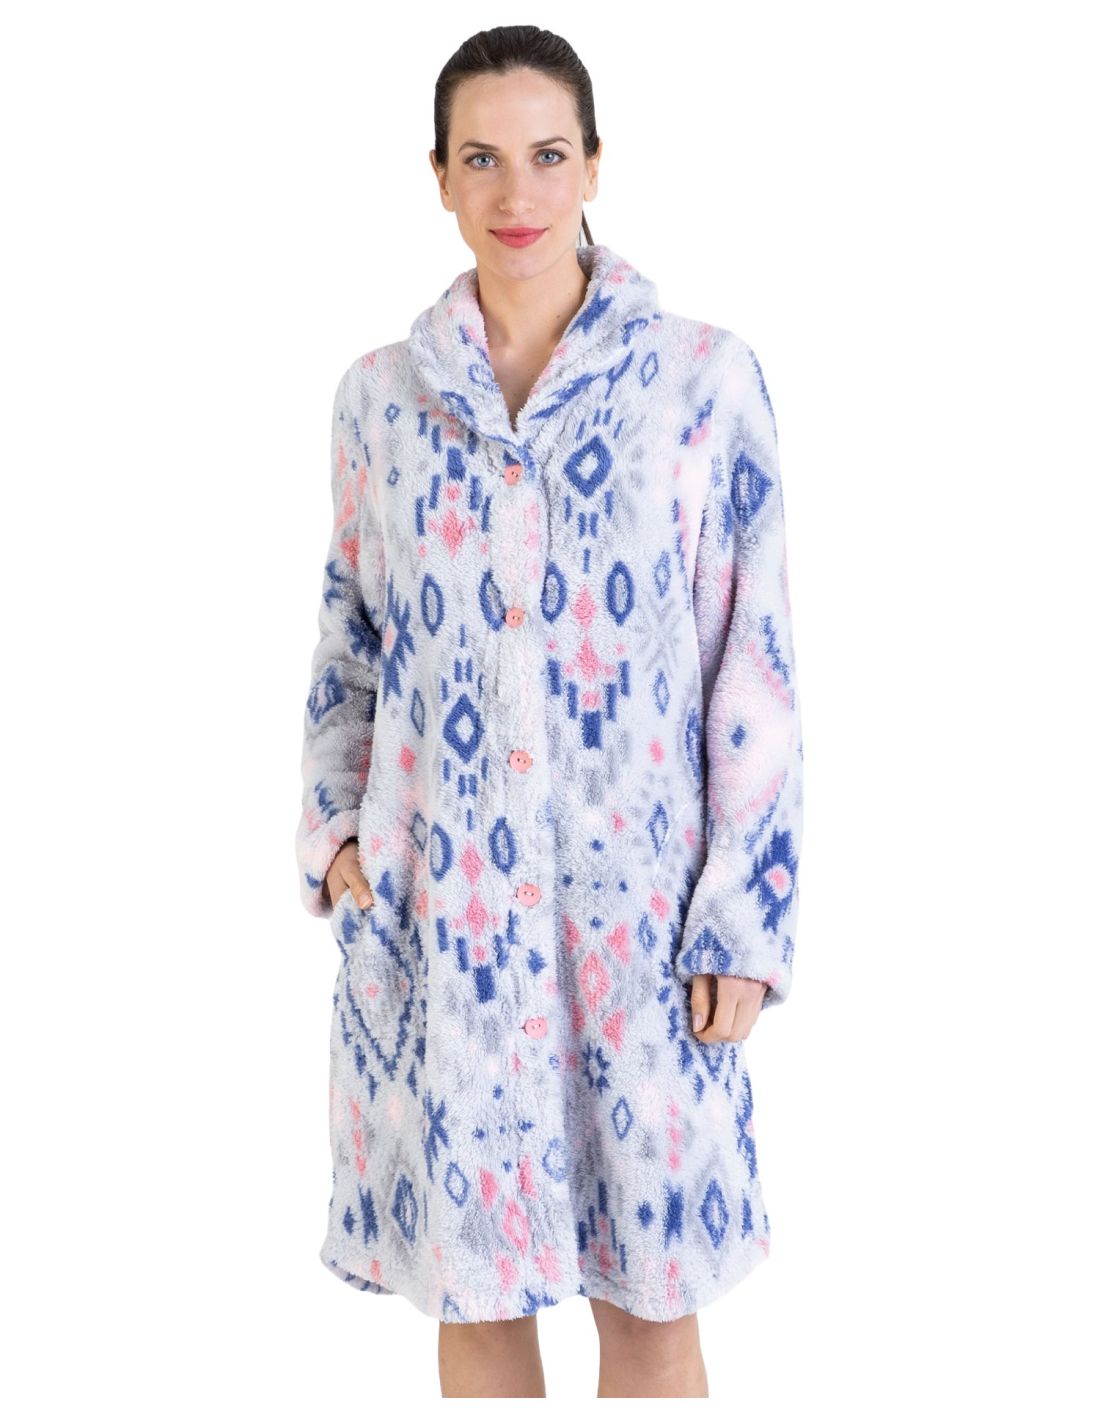 Bata larga de mujer para invierno marca Kinanit - Empresa Textiles Capella  Talla M